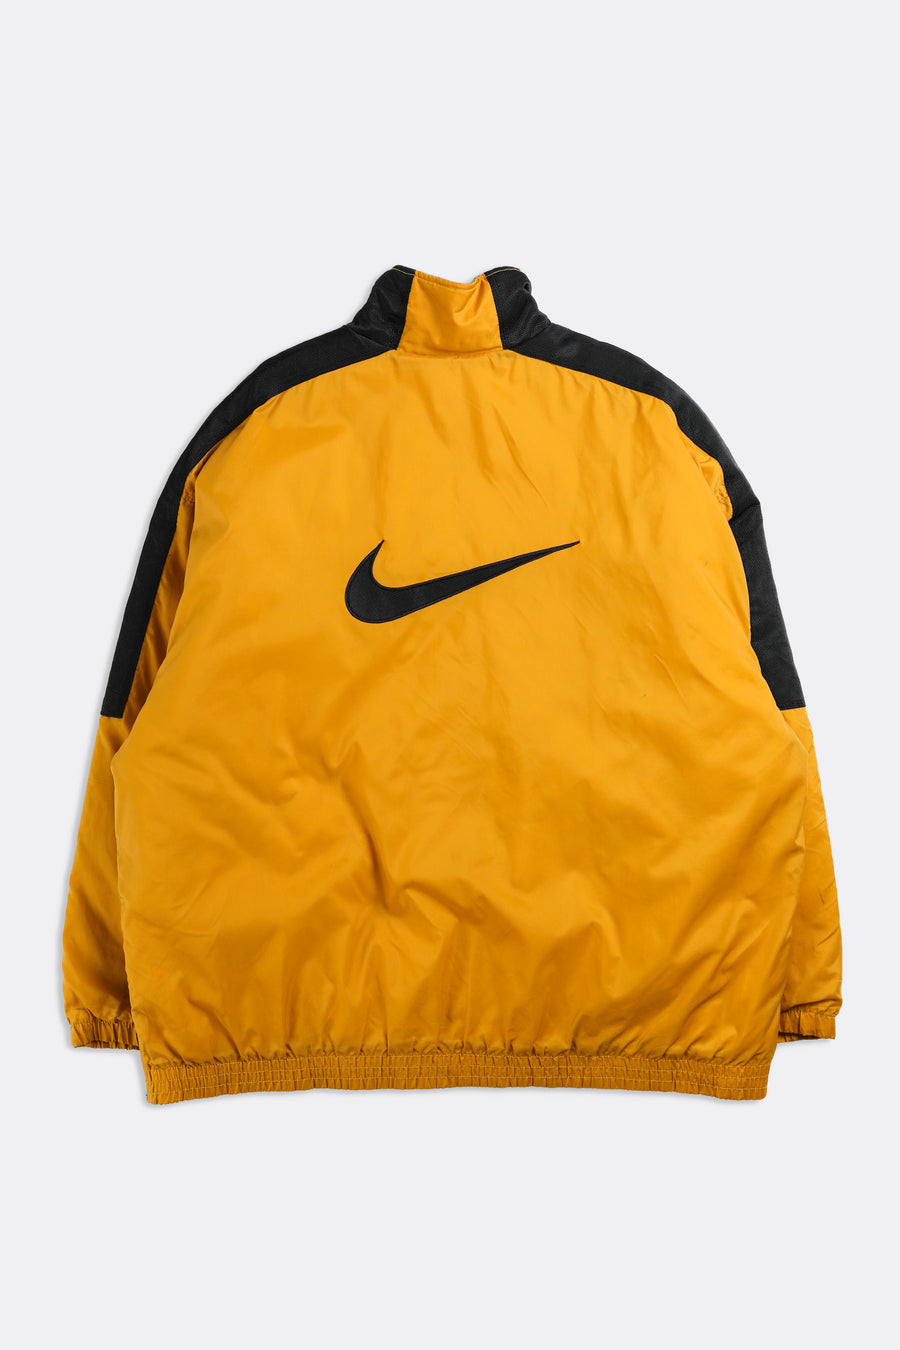 Vintage Nike Puffer Jacket